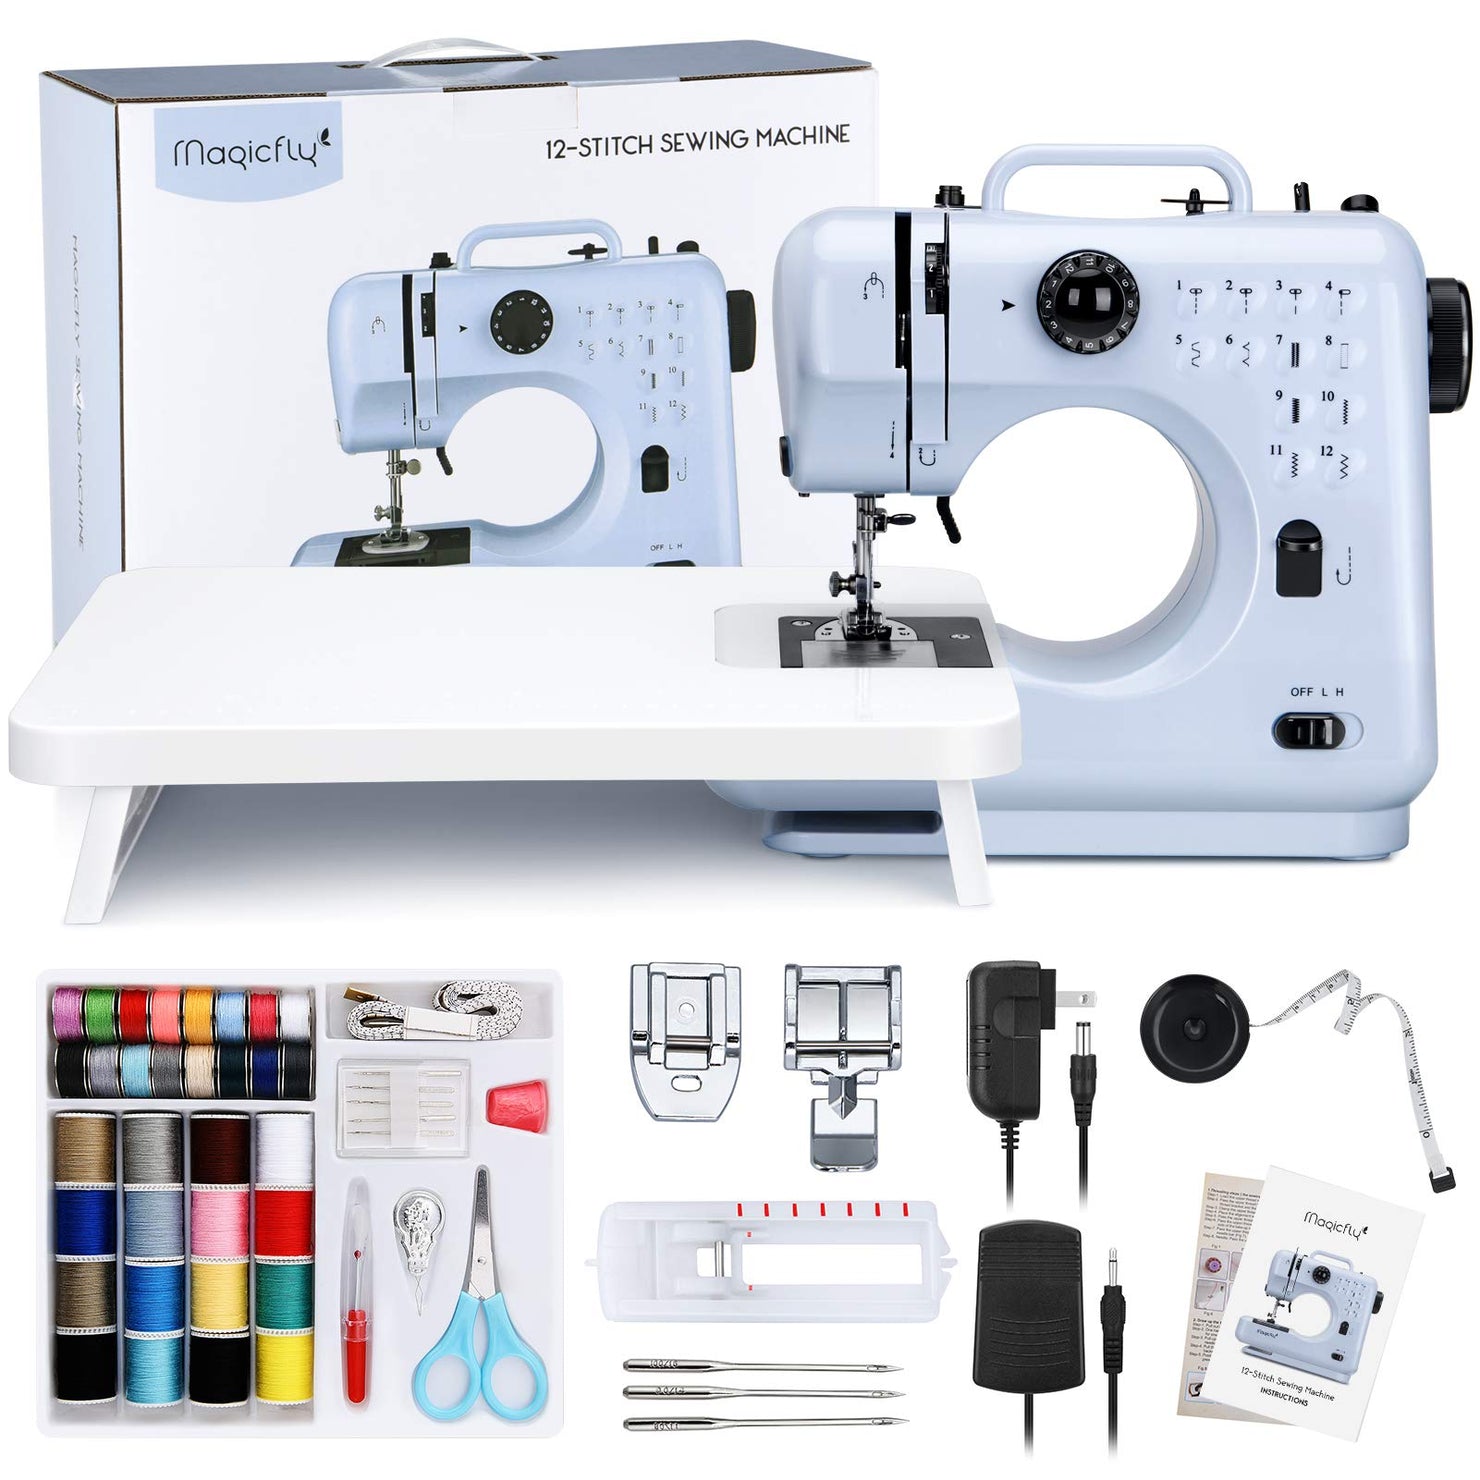 Magicfly 12 stitch sewing machine